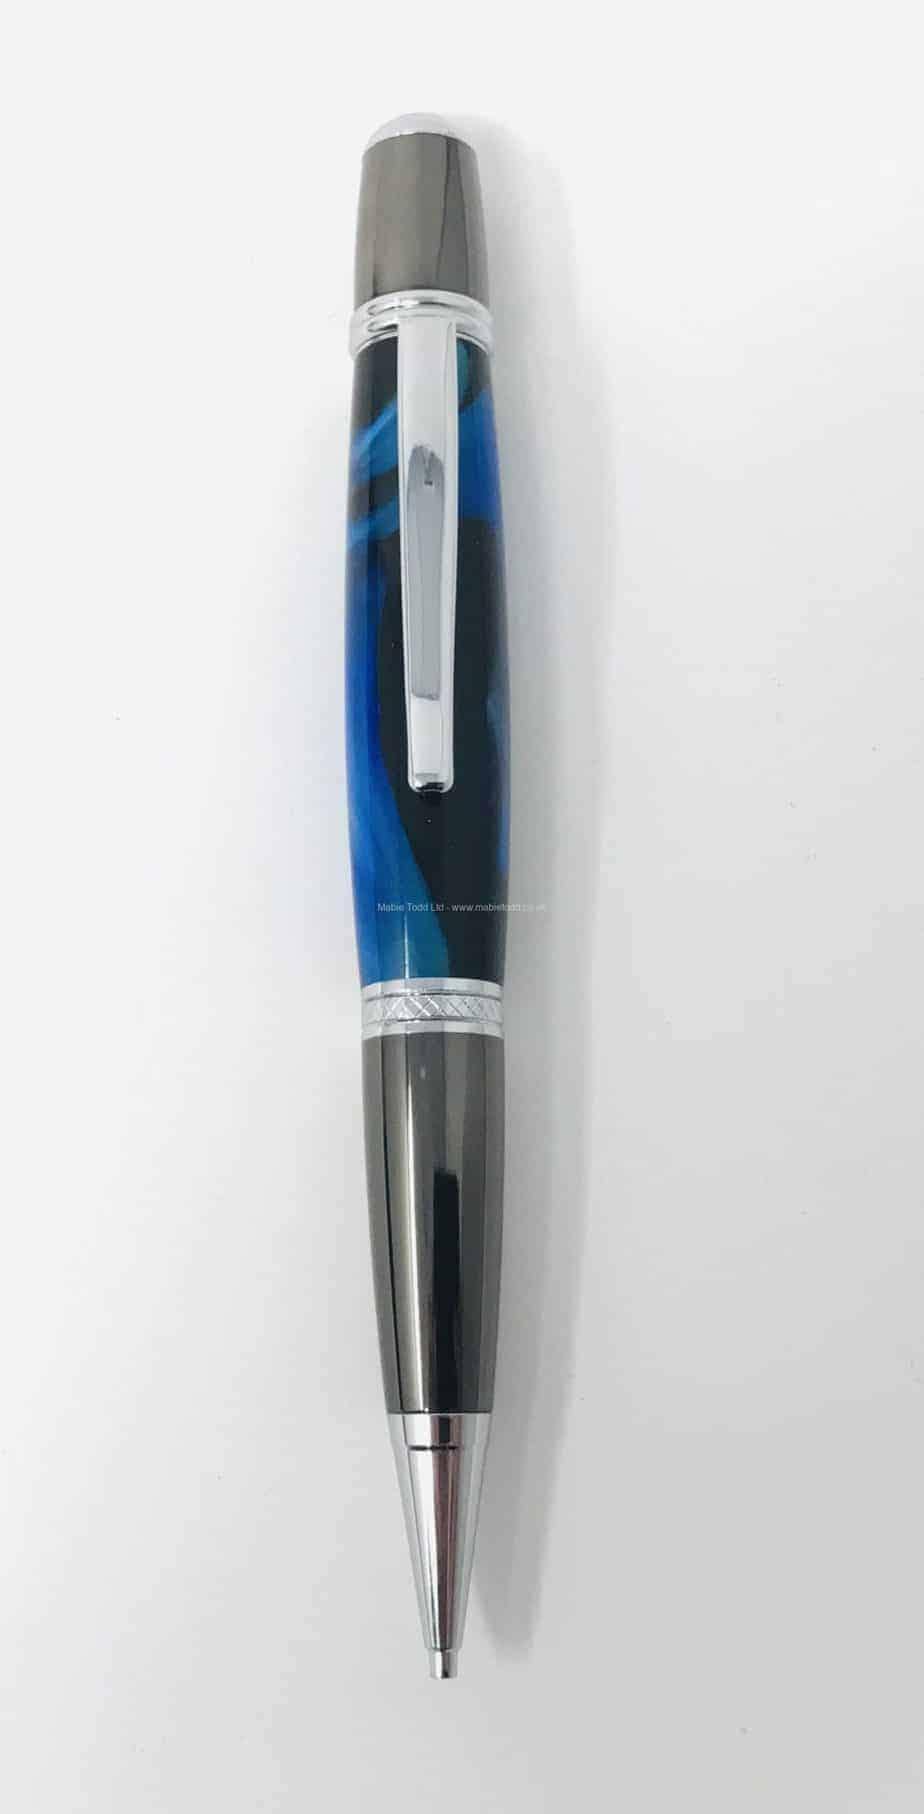 Cerra  Pencil Kit - Chrome + Gun Metal - UK Pen Blanks